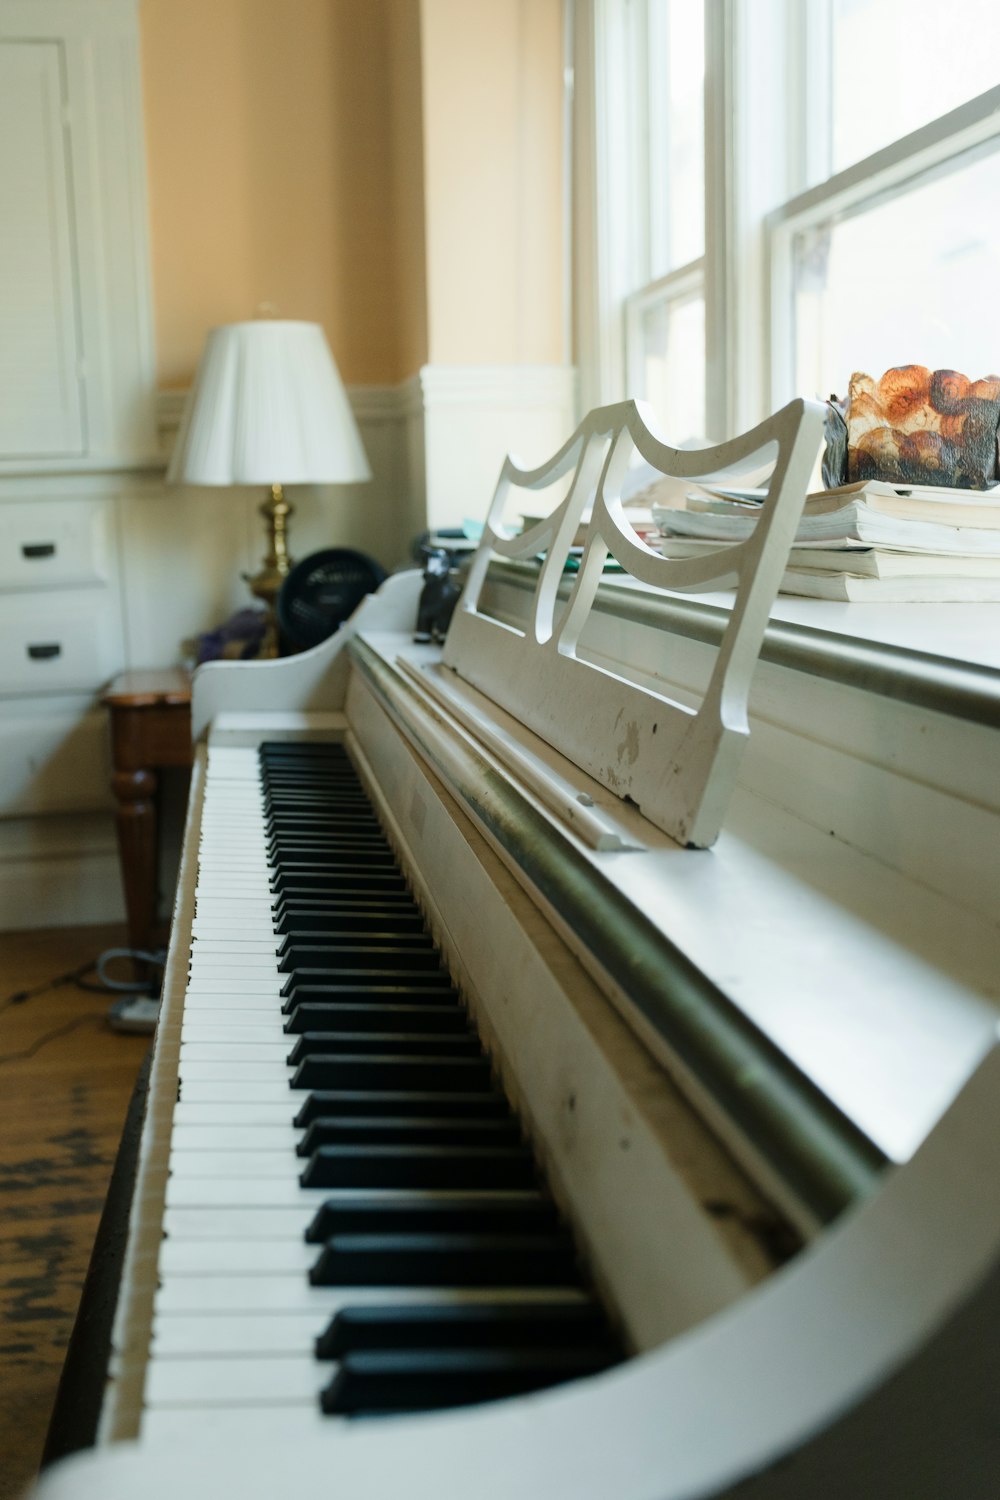 a close up of a piano near a window